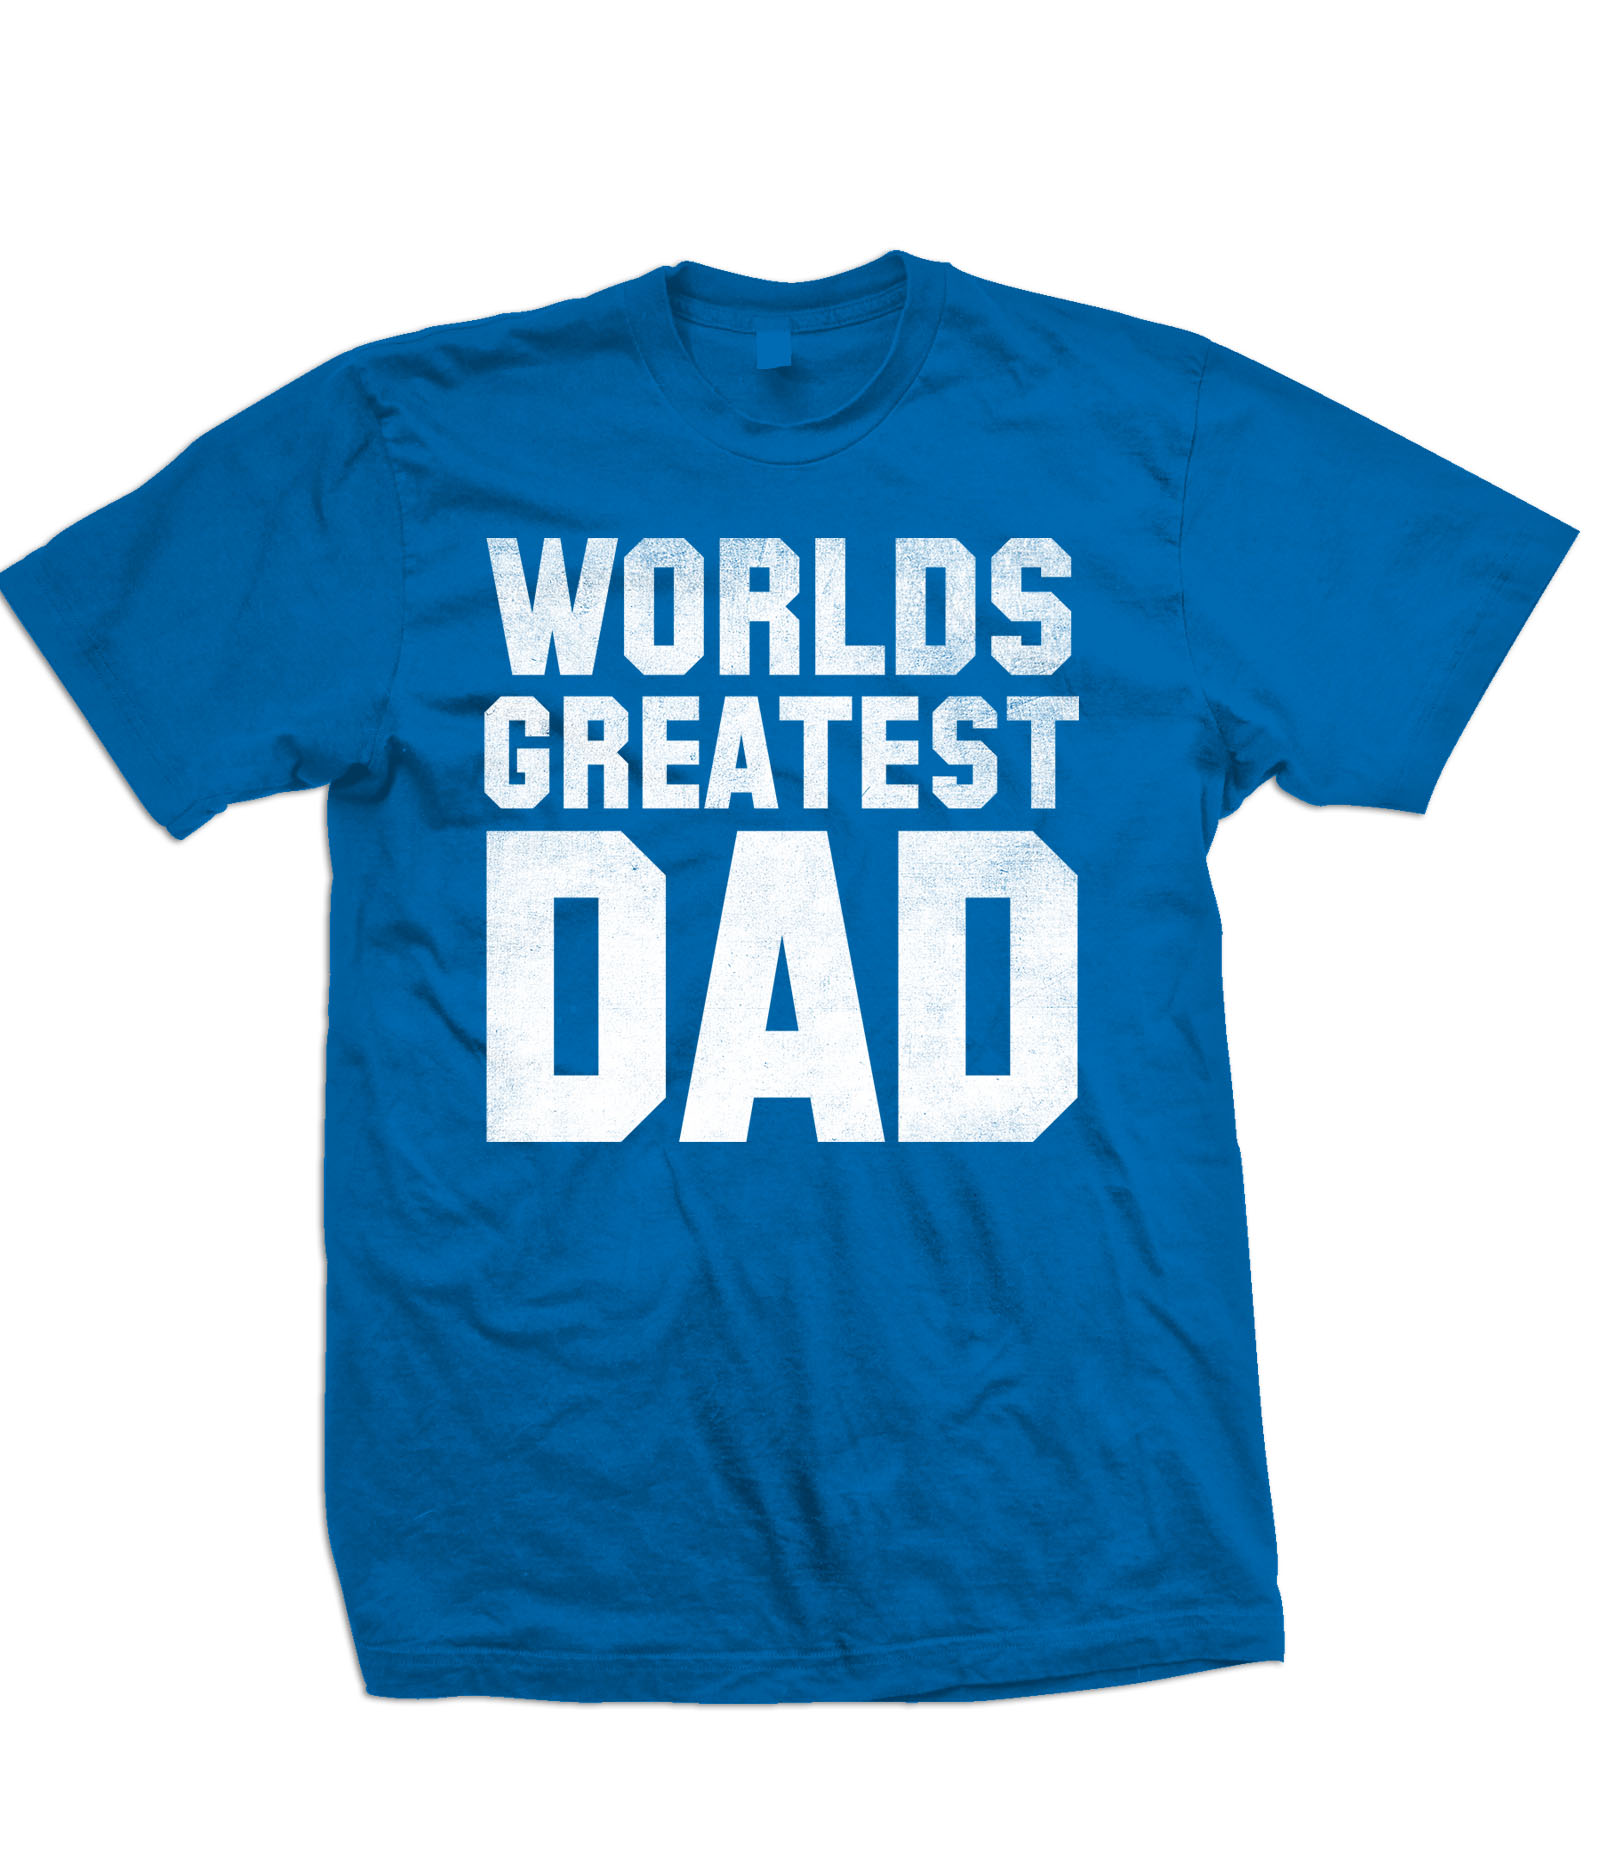 Best dad ever надпись. Футболка с принтом best Daddy. Hell's Greatest dad текст. The World Greatest dad SIM.